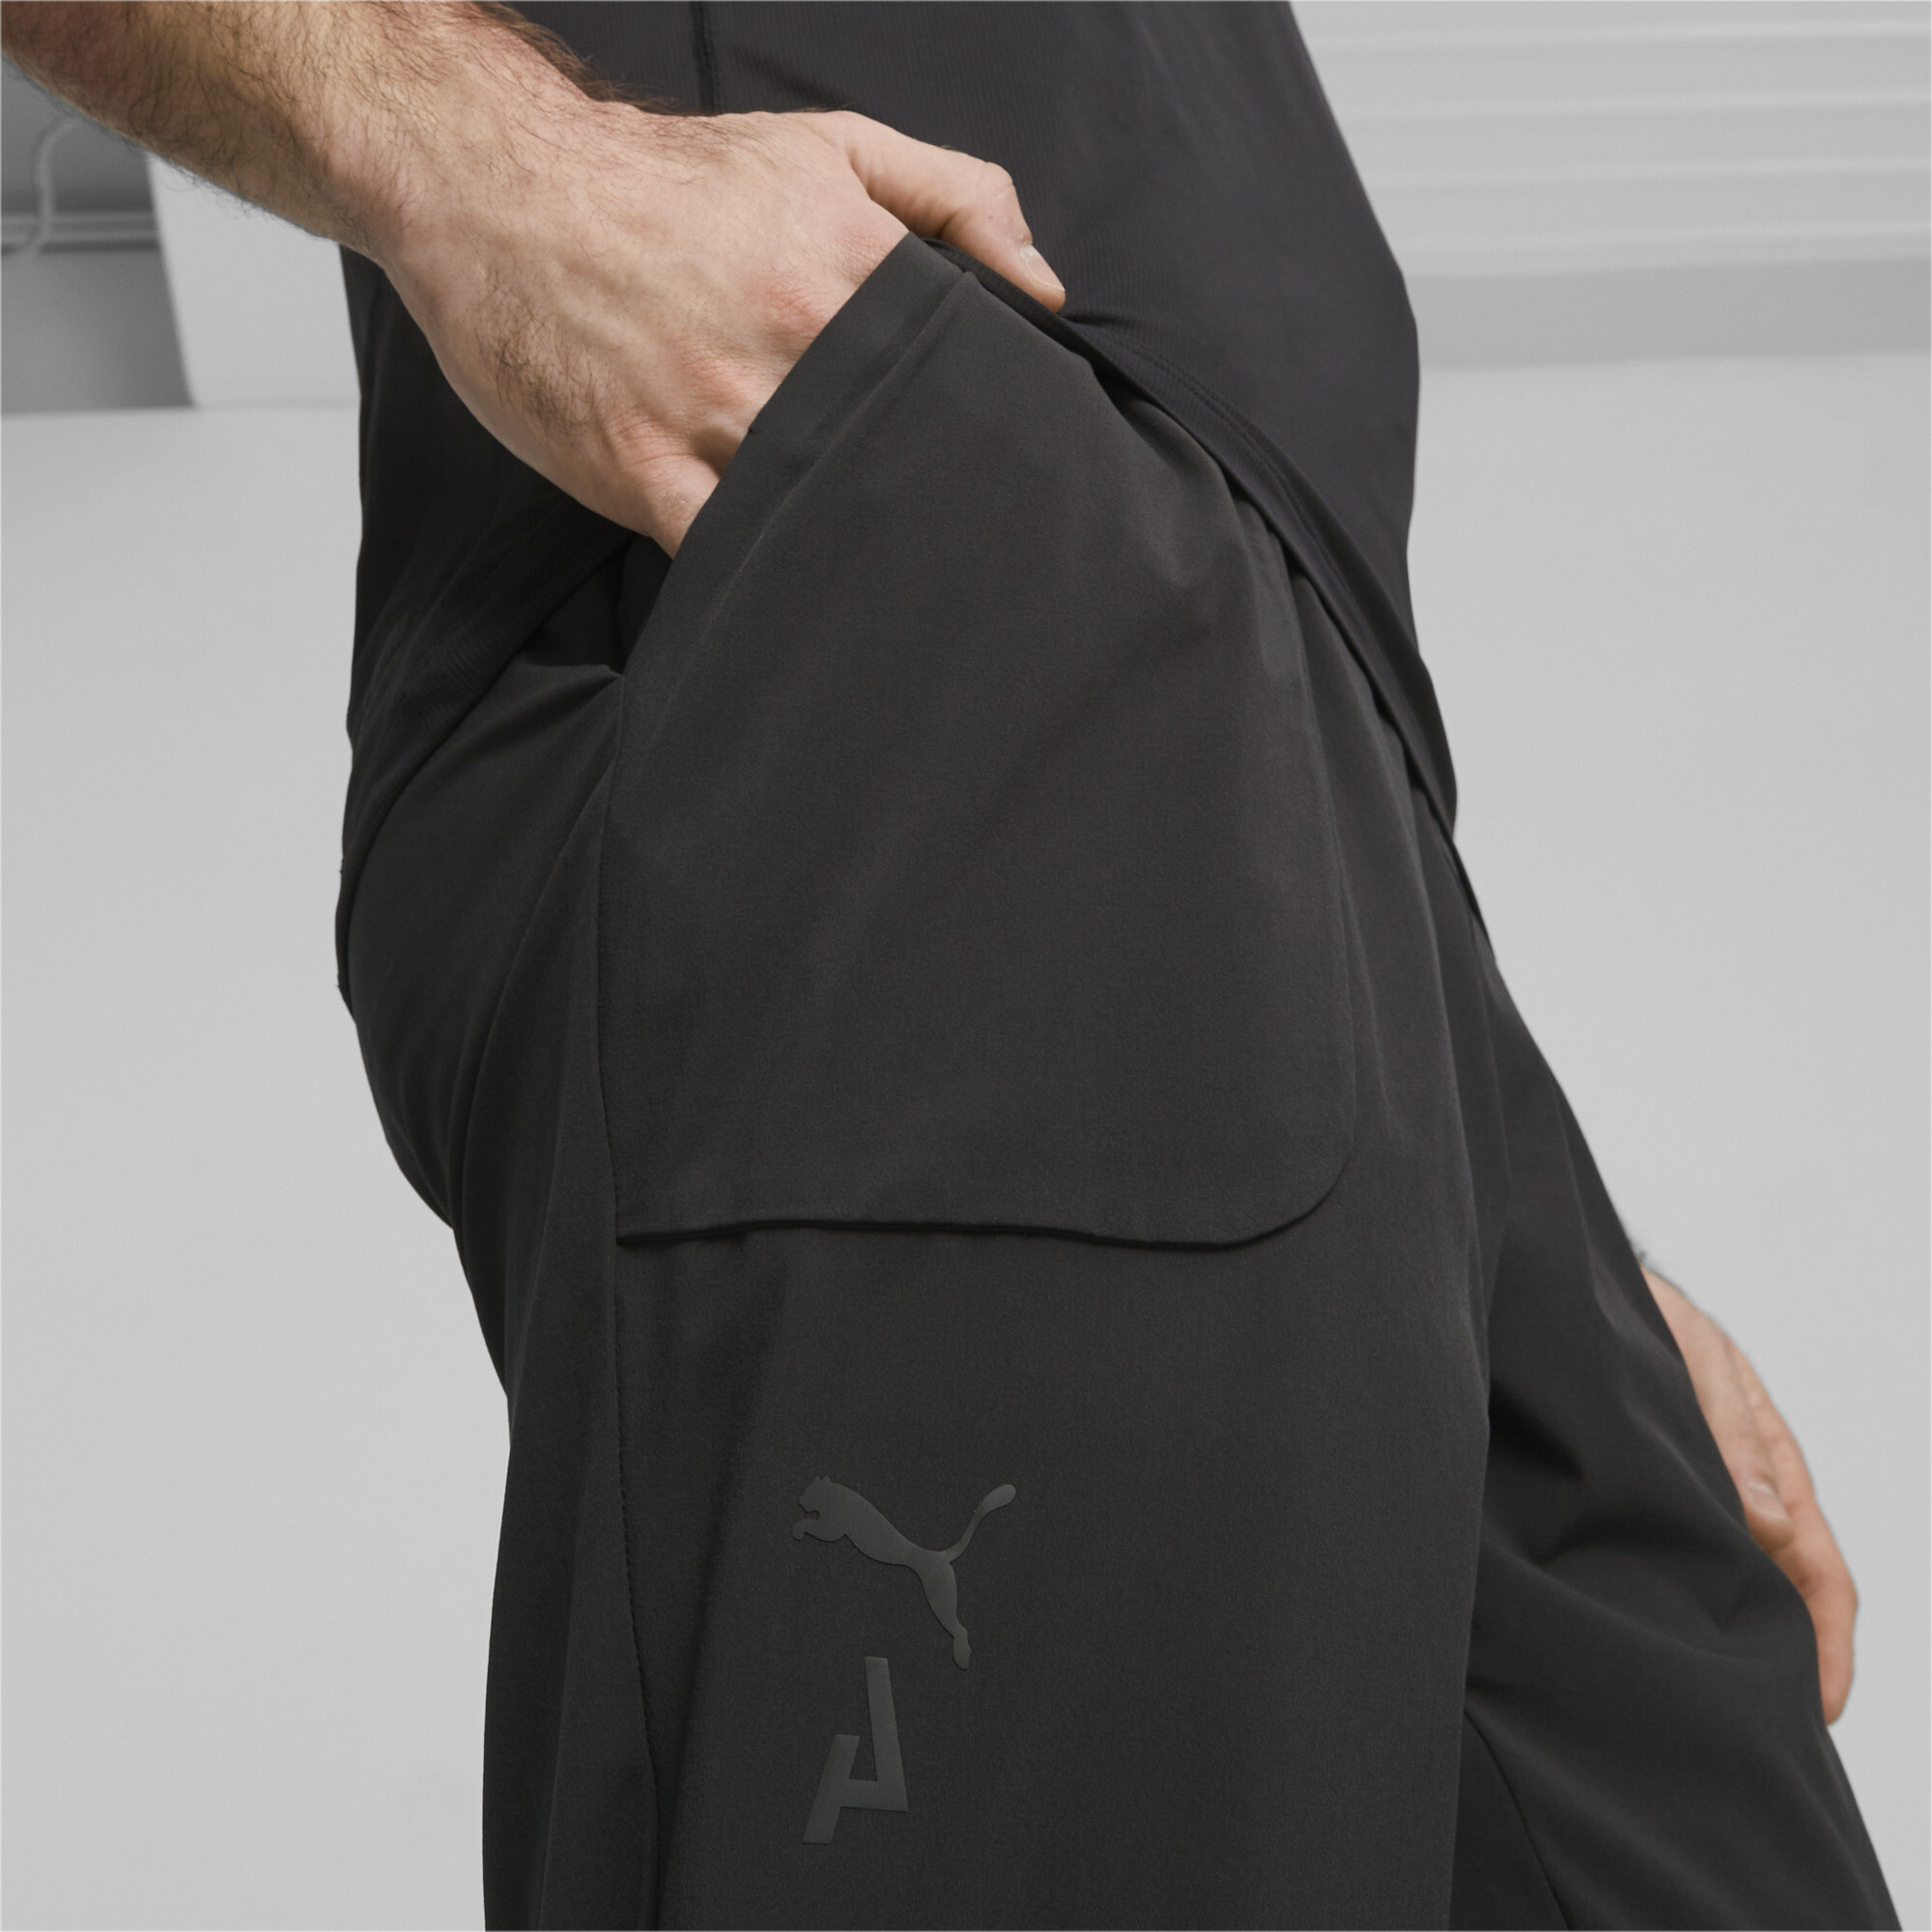 Men's PUMA SEASONS Lightweight Trail Running Pants In Black, Size XS